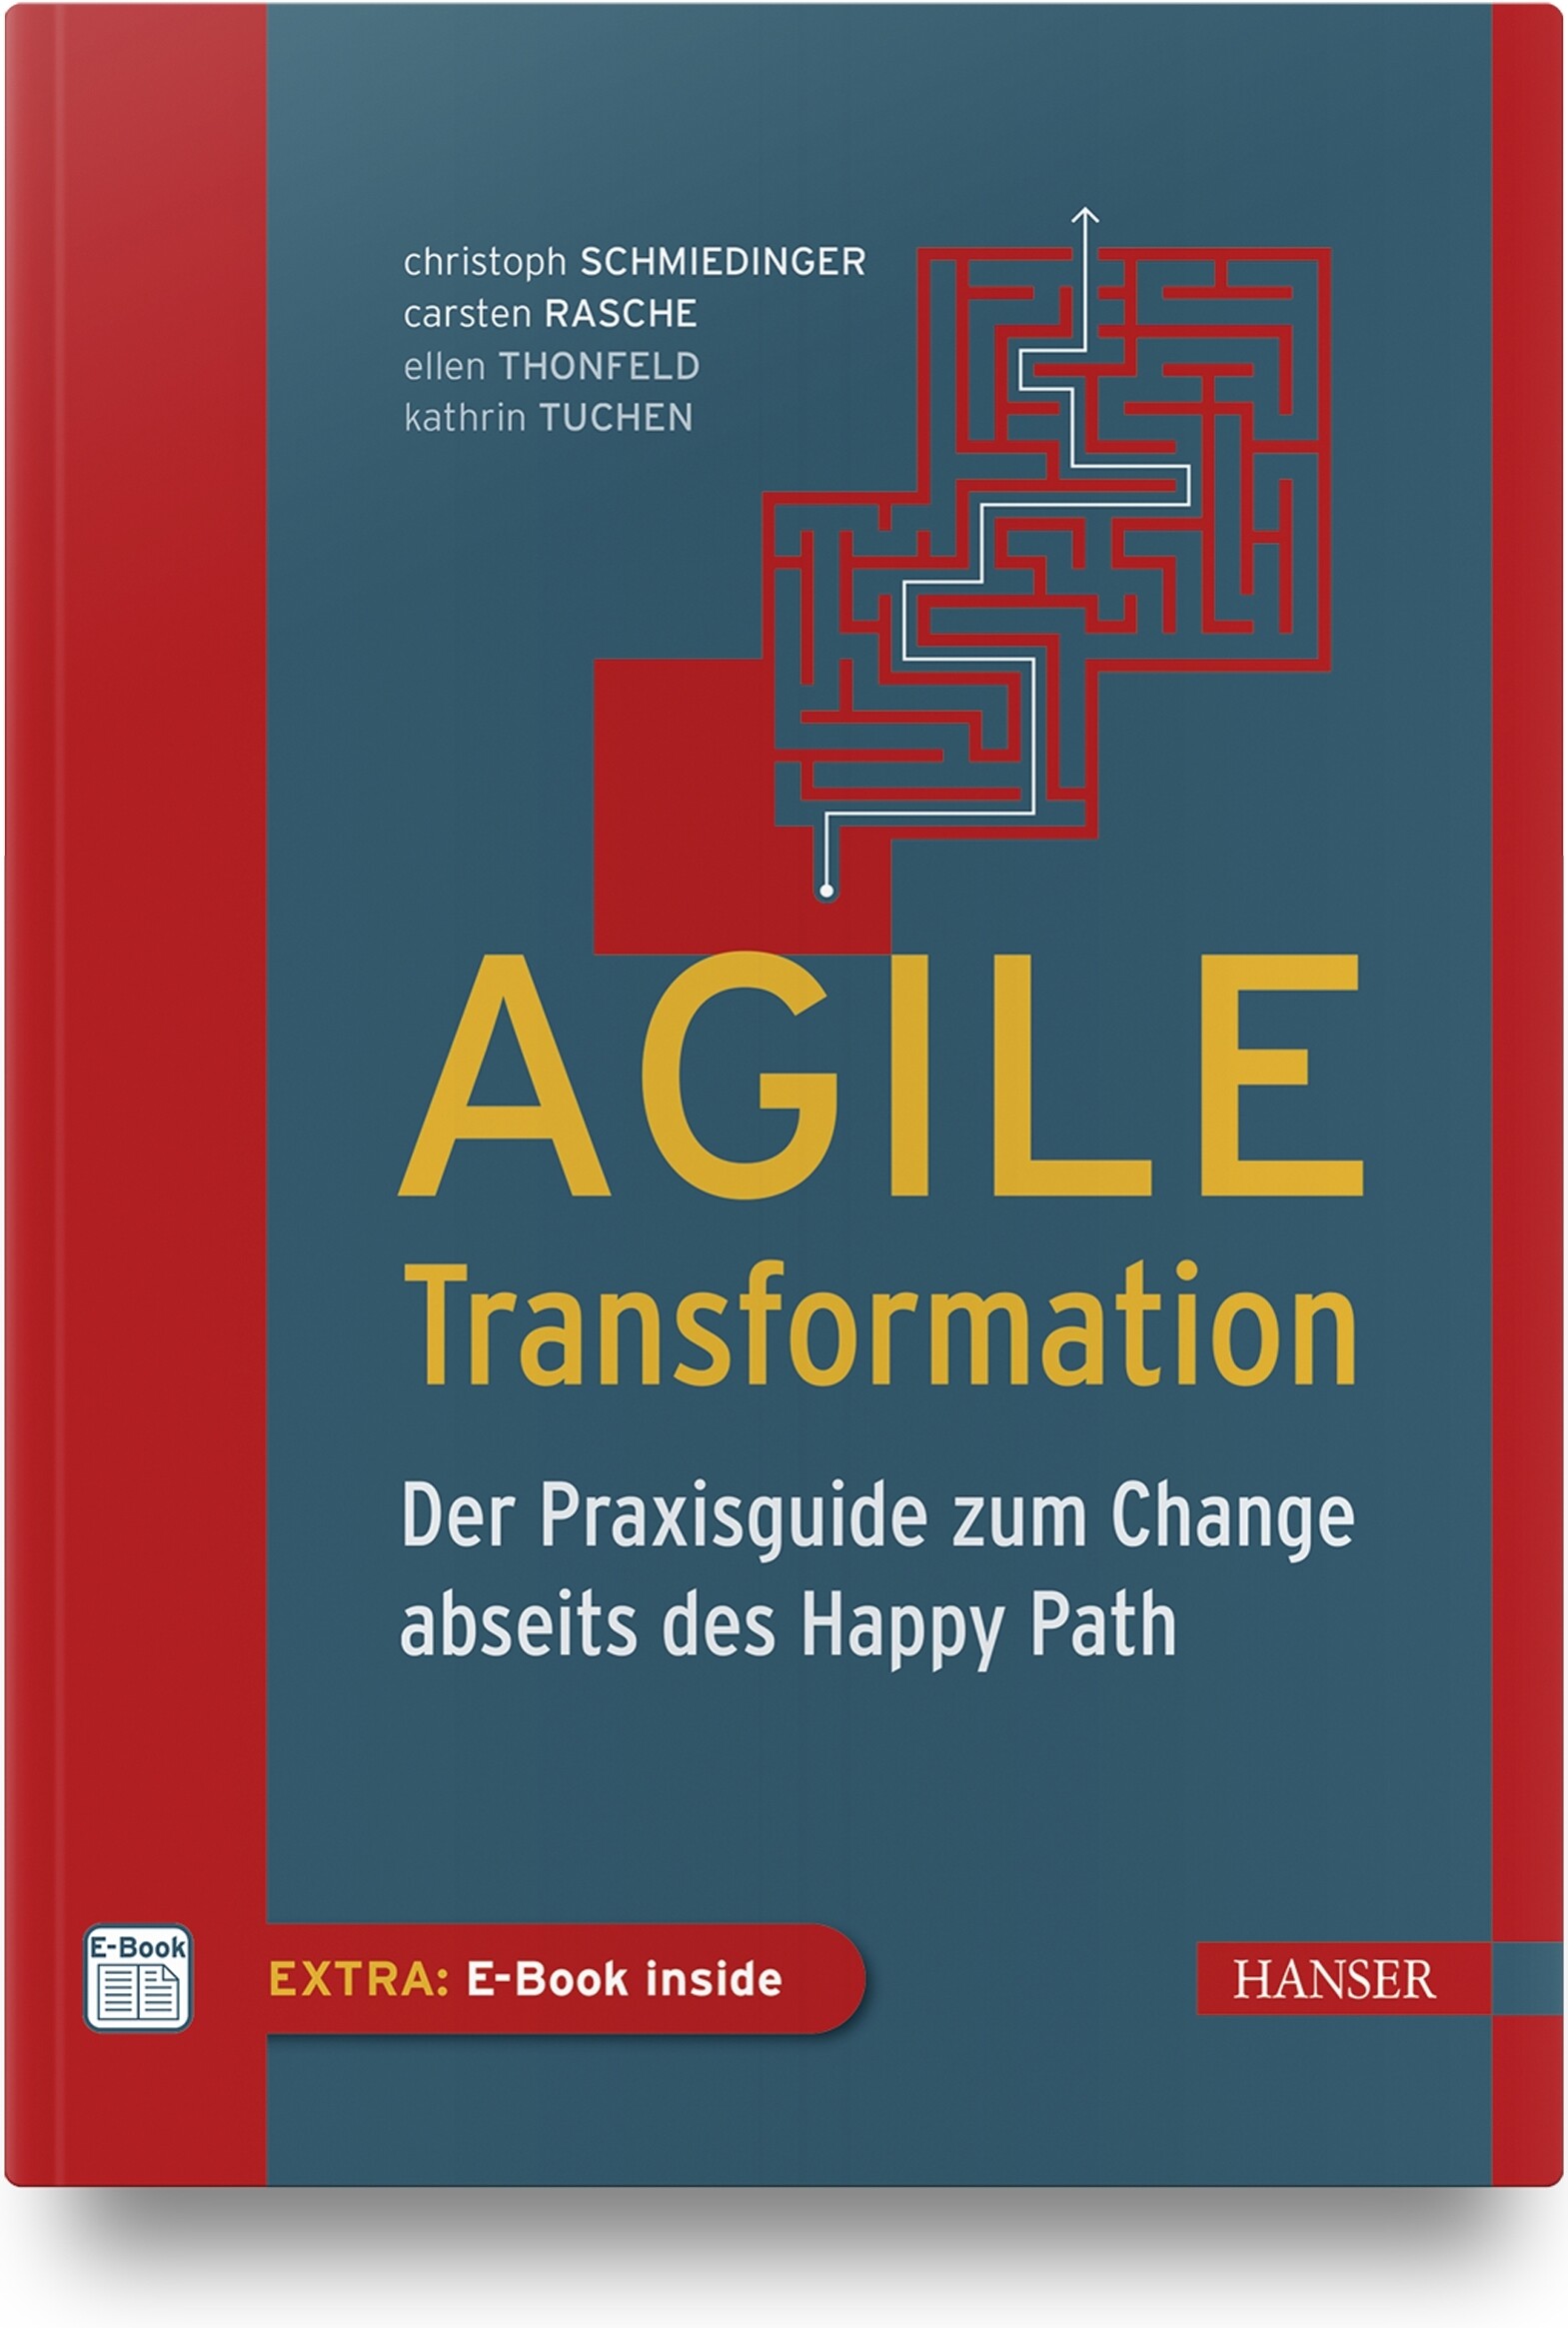 Agile Transformation (Hanser)